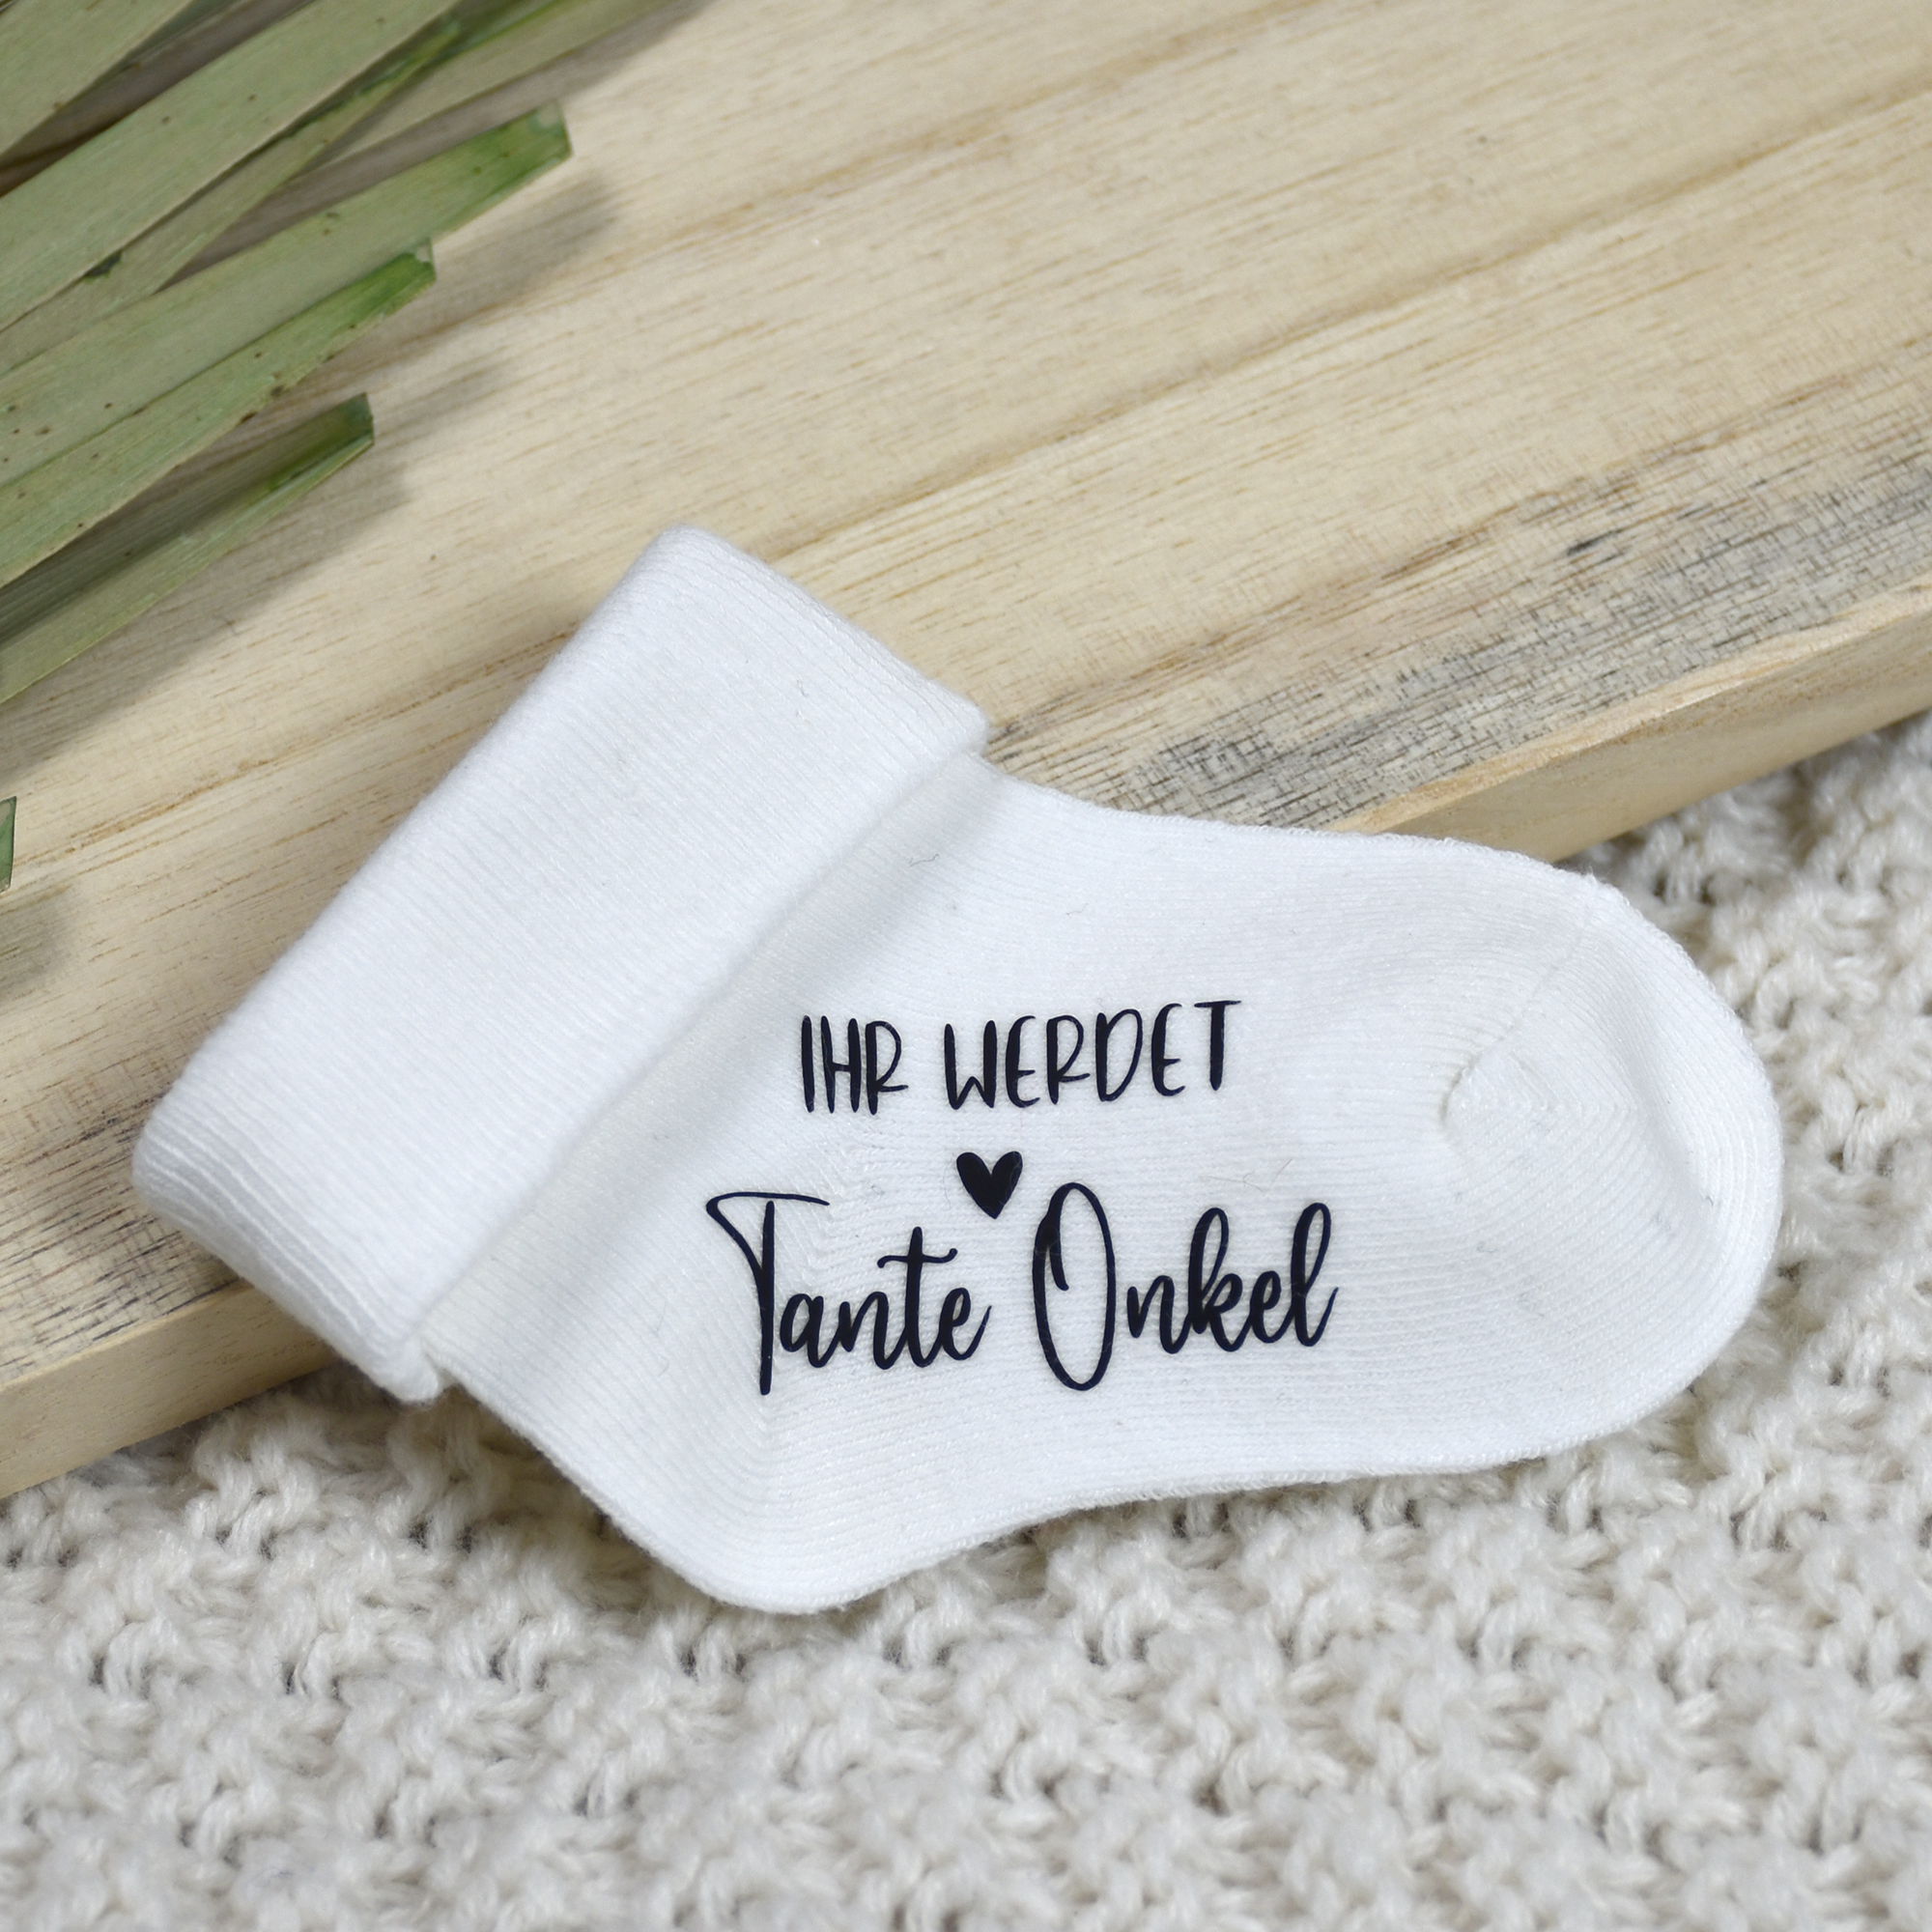 Baby-Socken Geschenk für Tante & Onkel | Schwangerschaftsverkündung